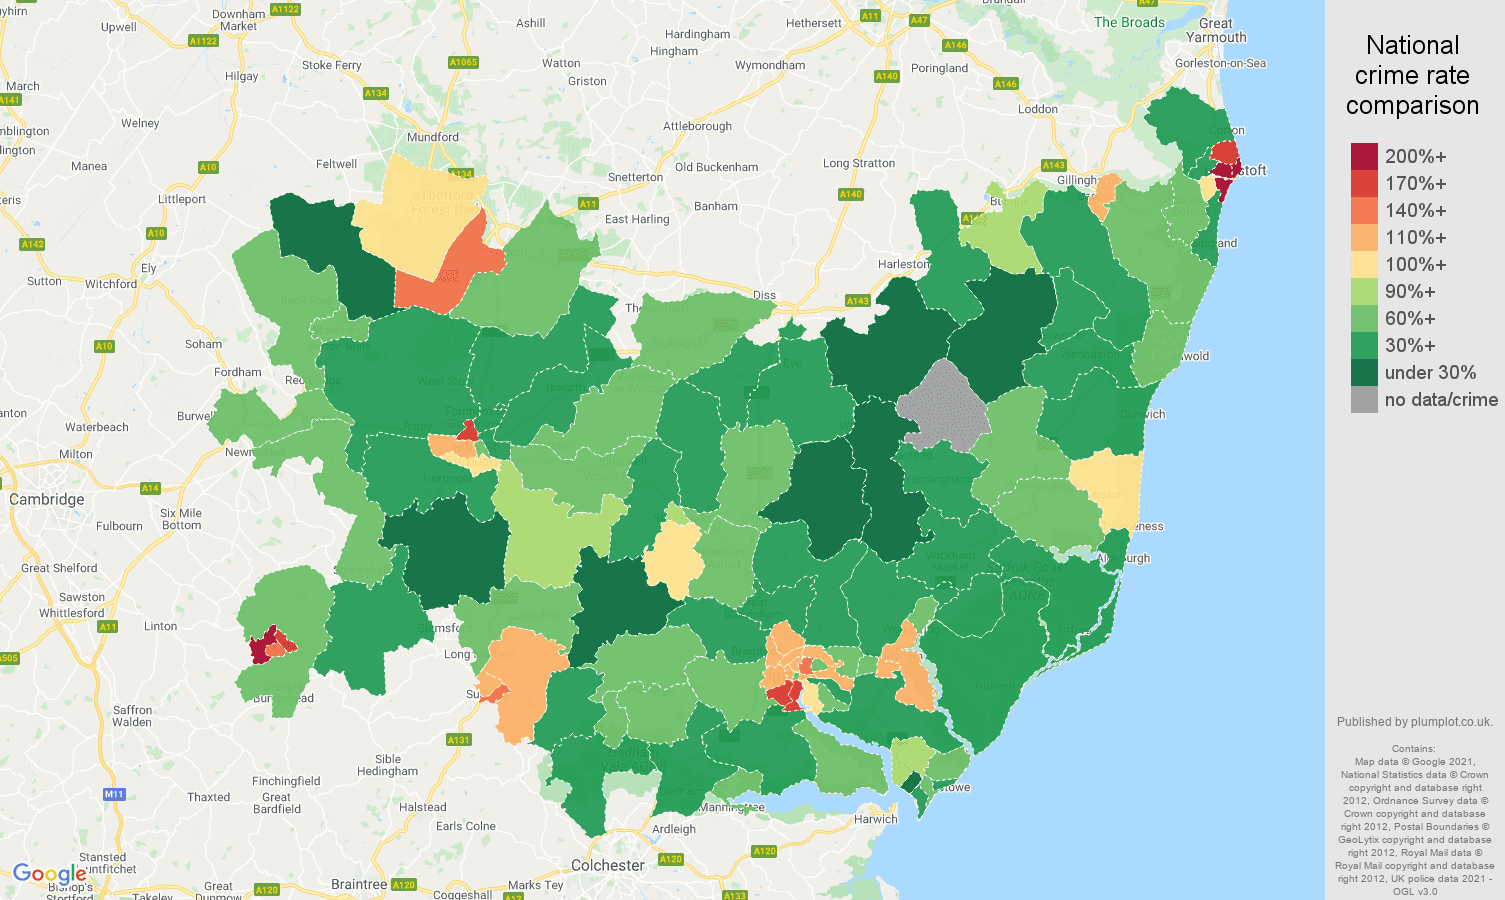 Suffolk criminal damage and arson crime rate comparison map